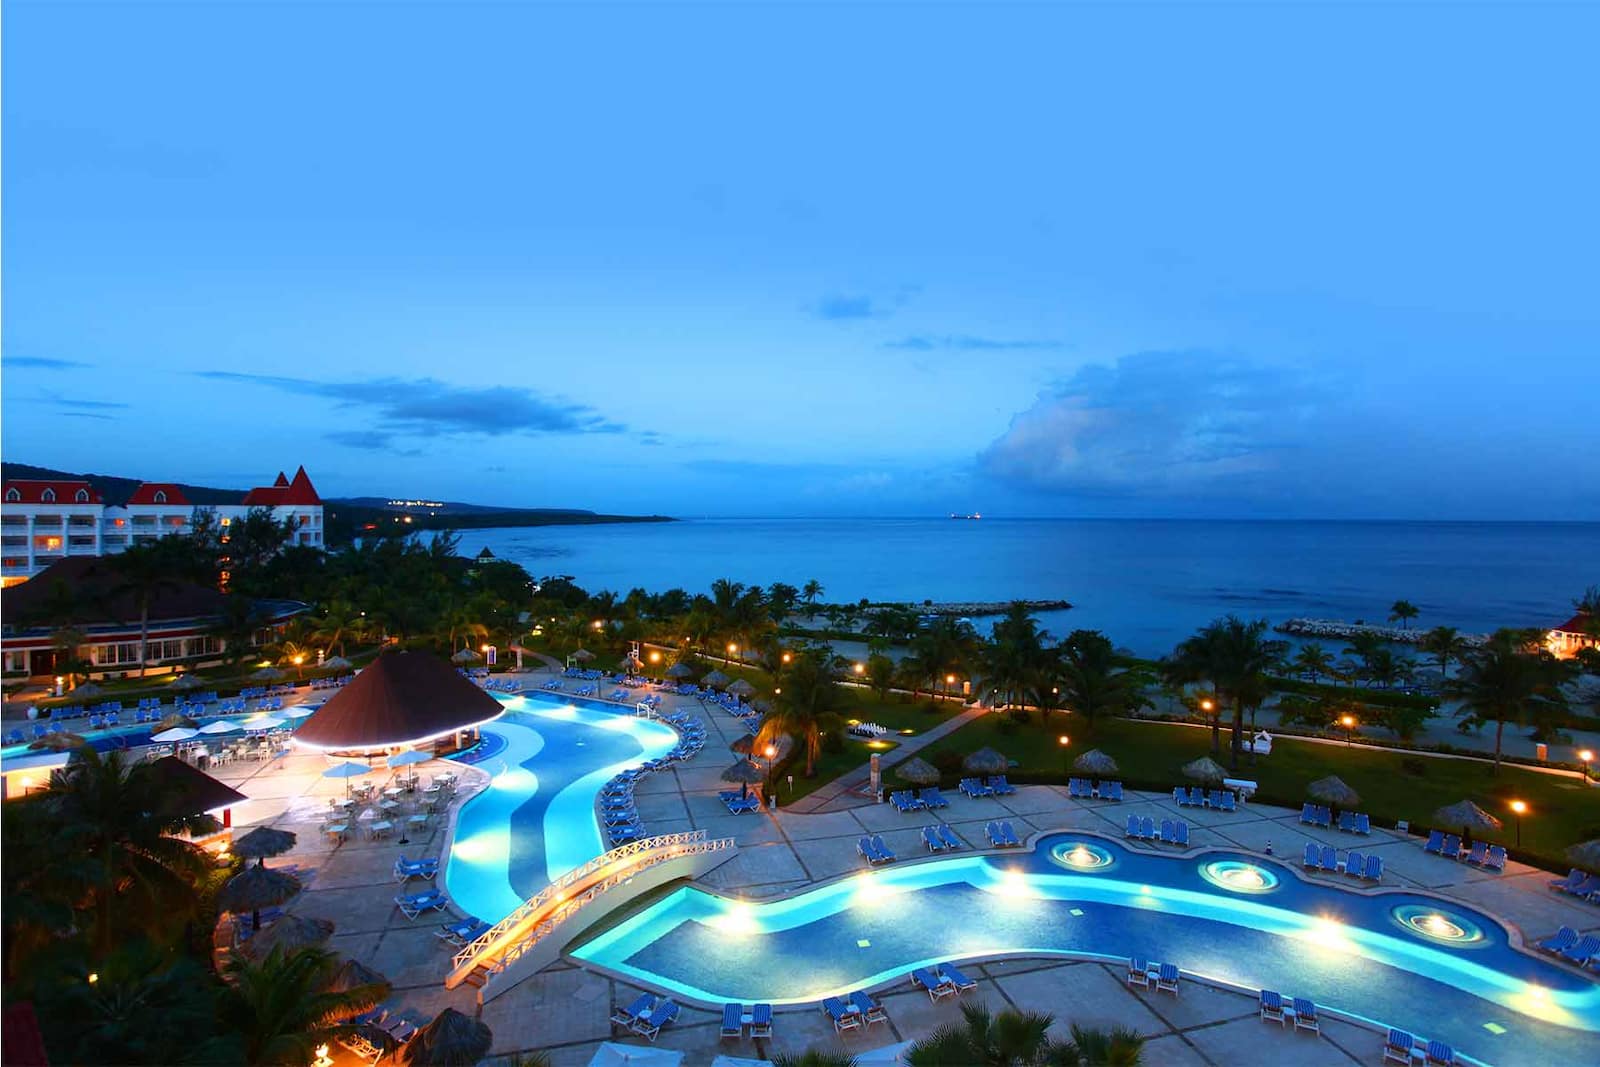 Fiwi place hotel jamaica aporealestate